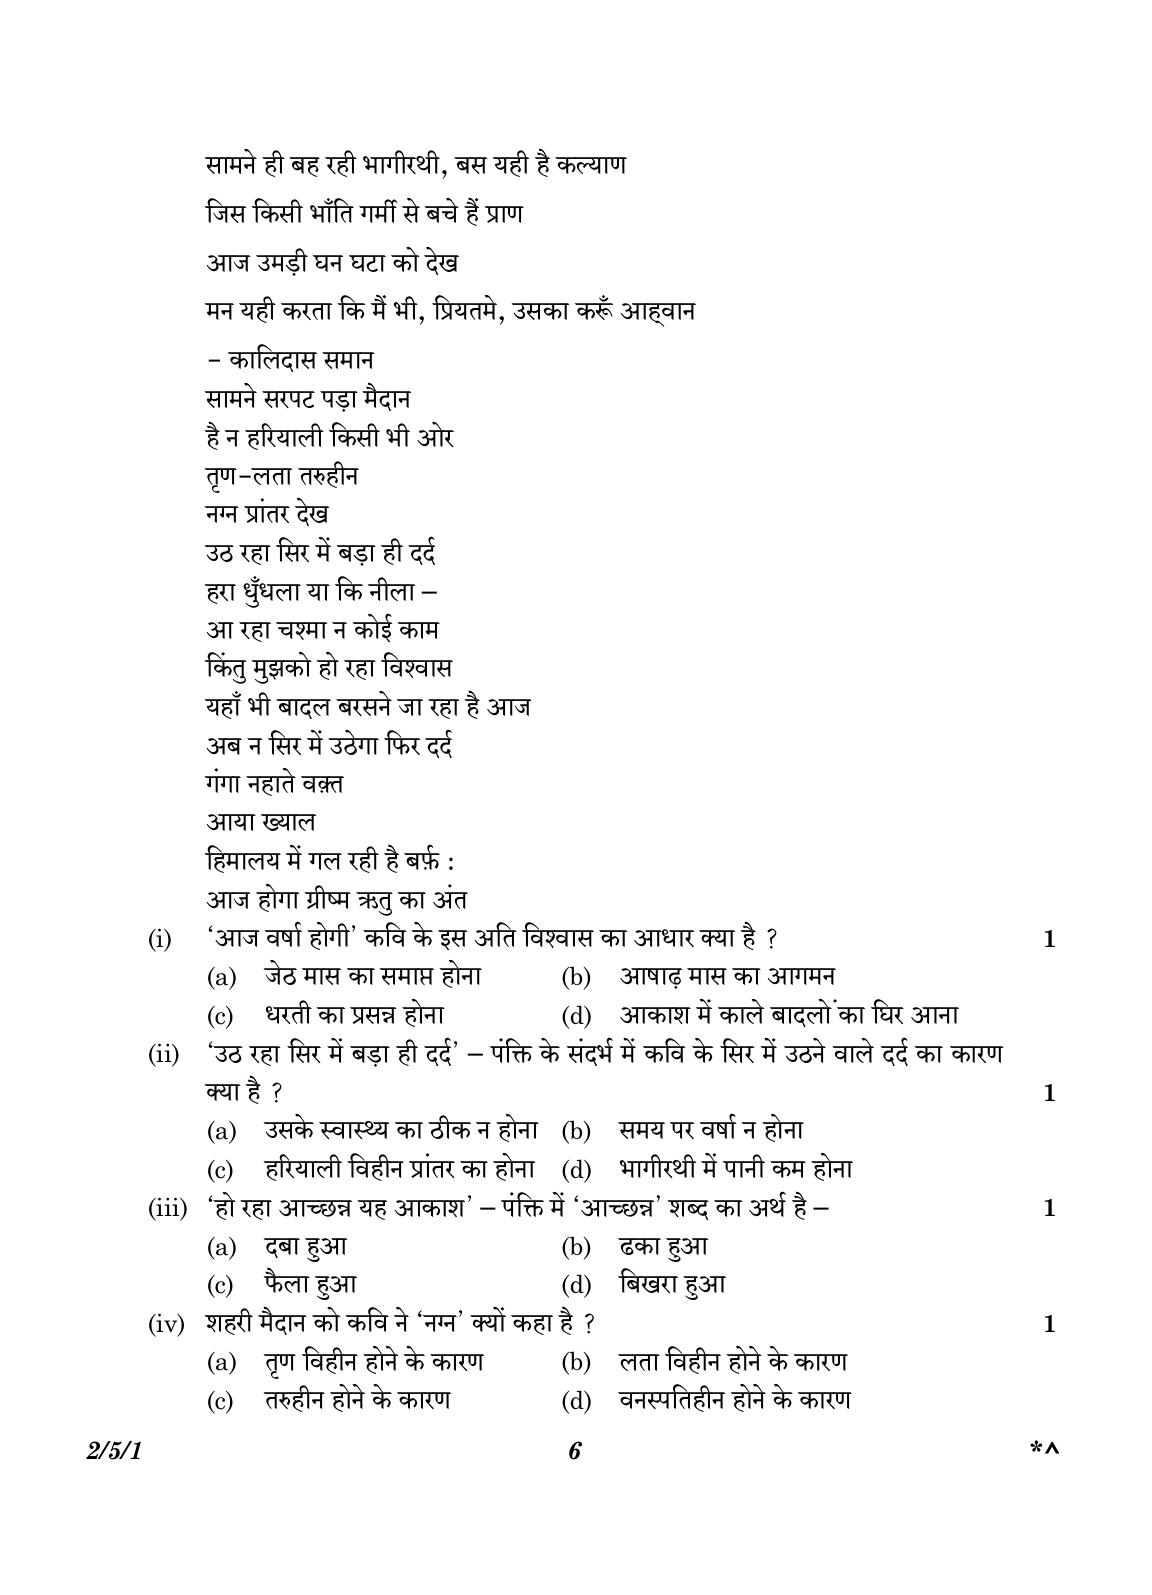 CBSE Class 12 2-5-1 Hindi Core version 2023 Question Paper - Page 6